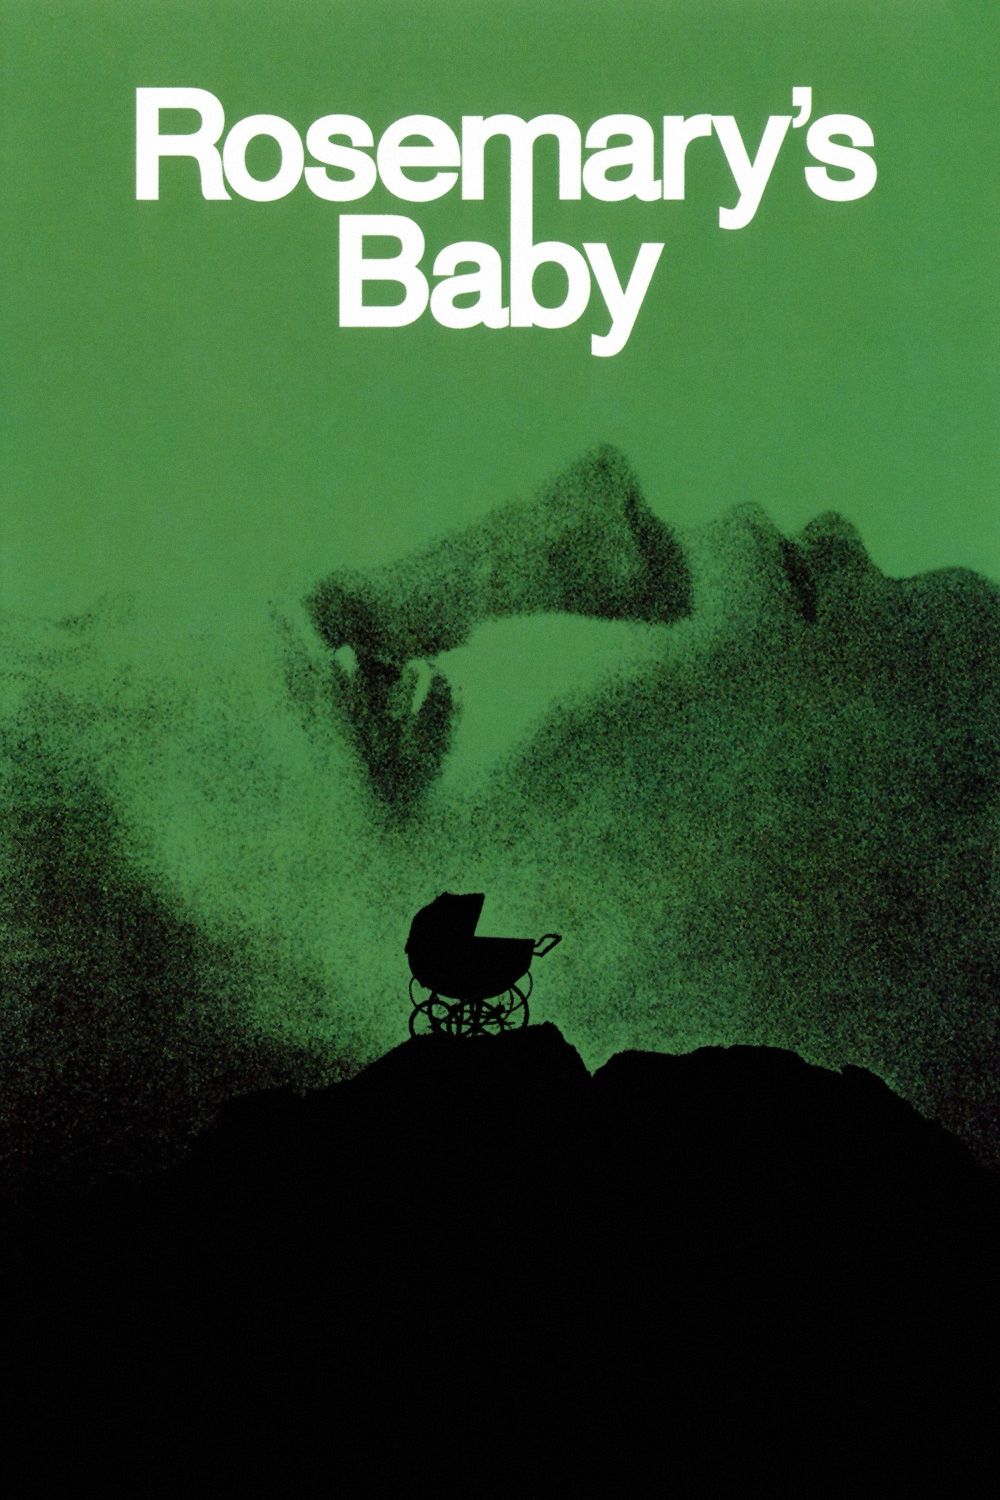 Rosemary’s-Baby-1968